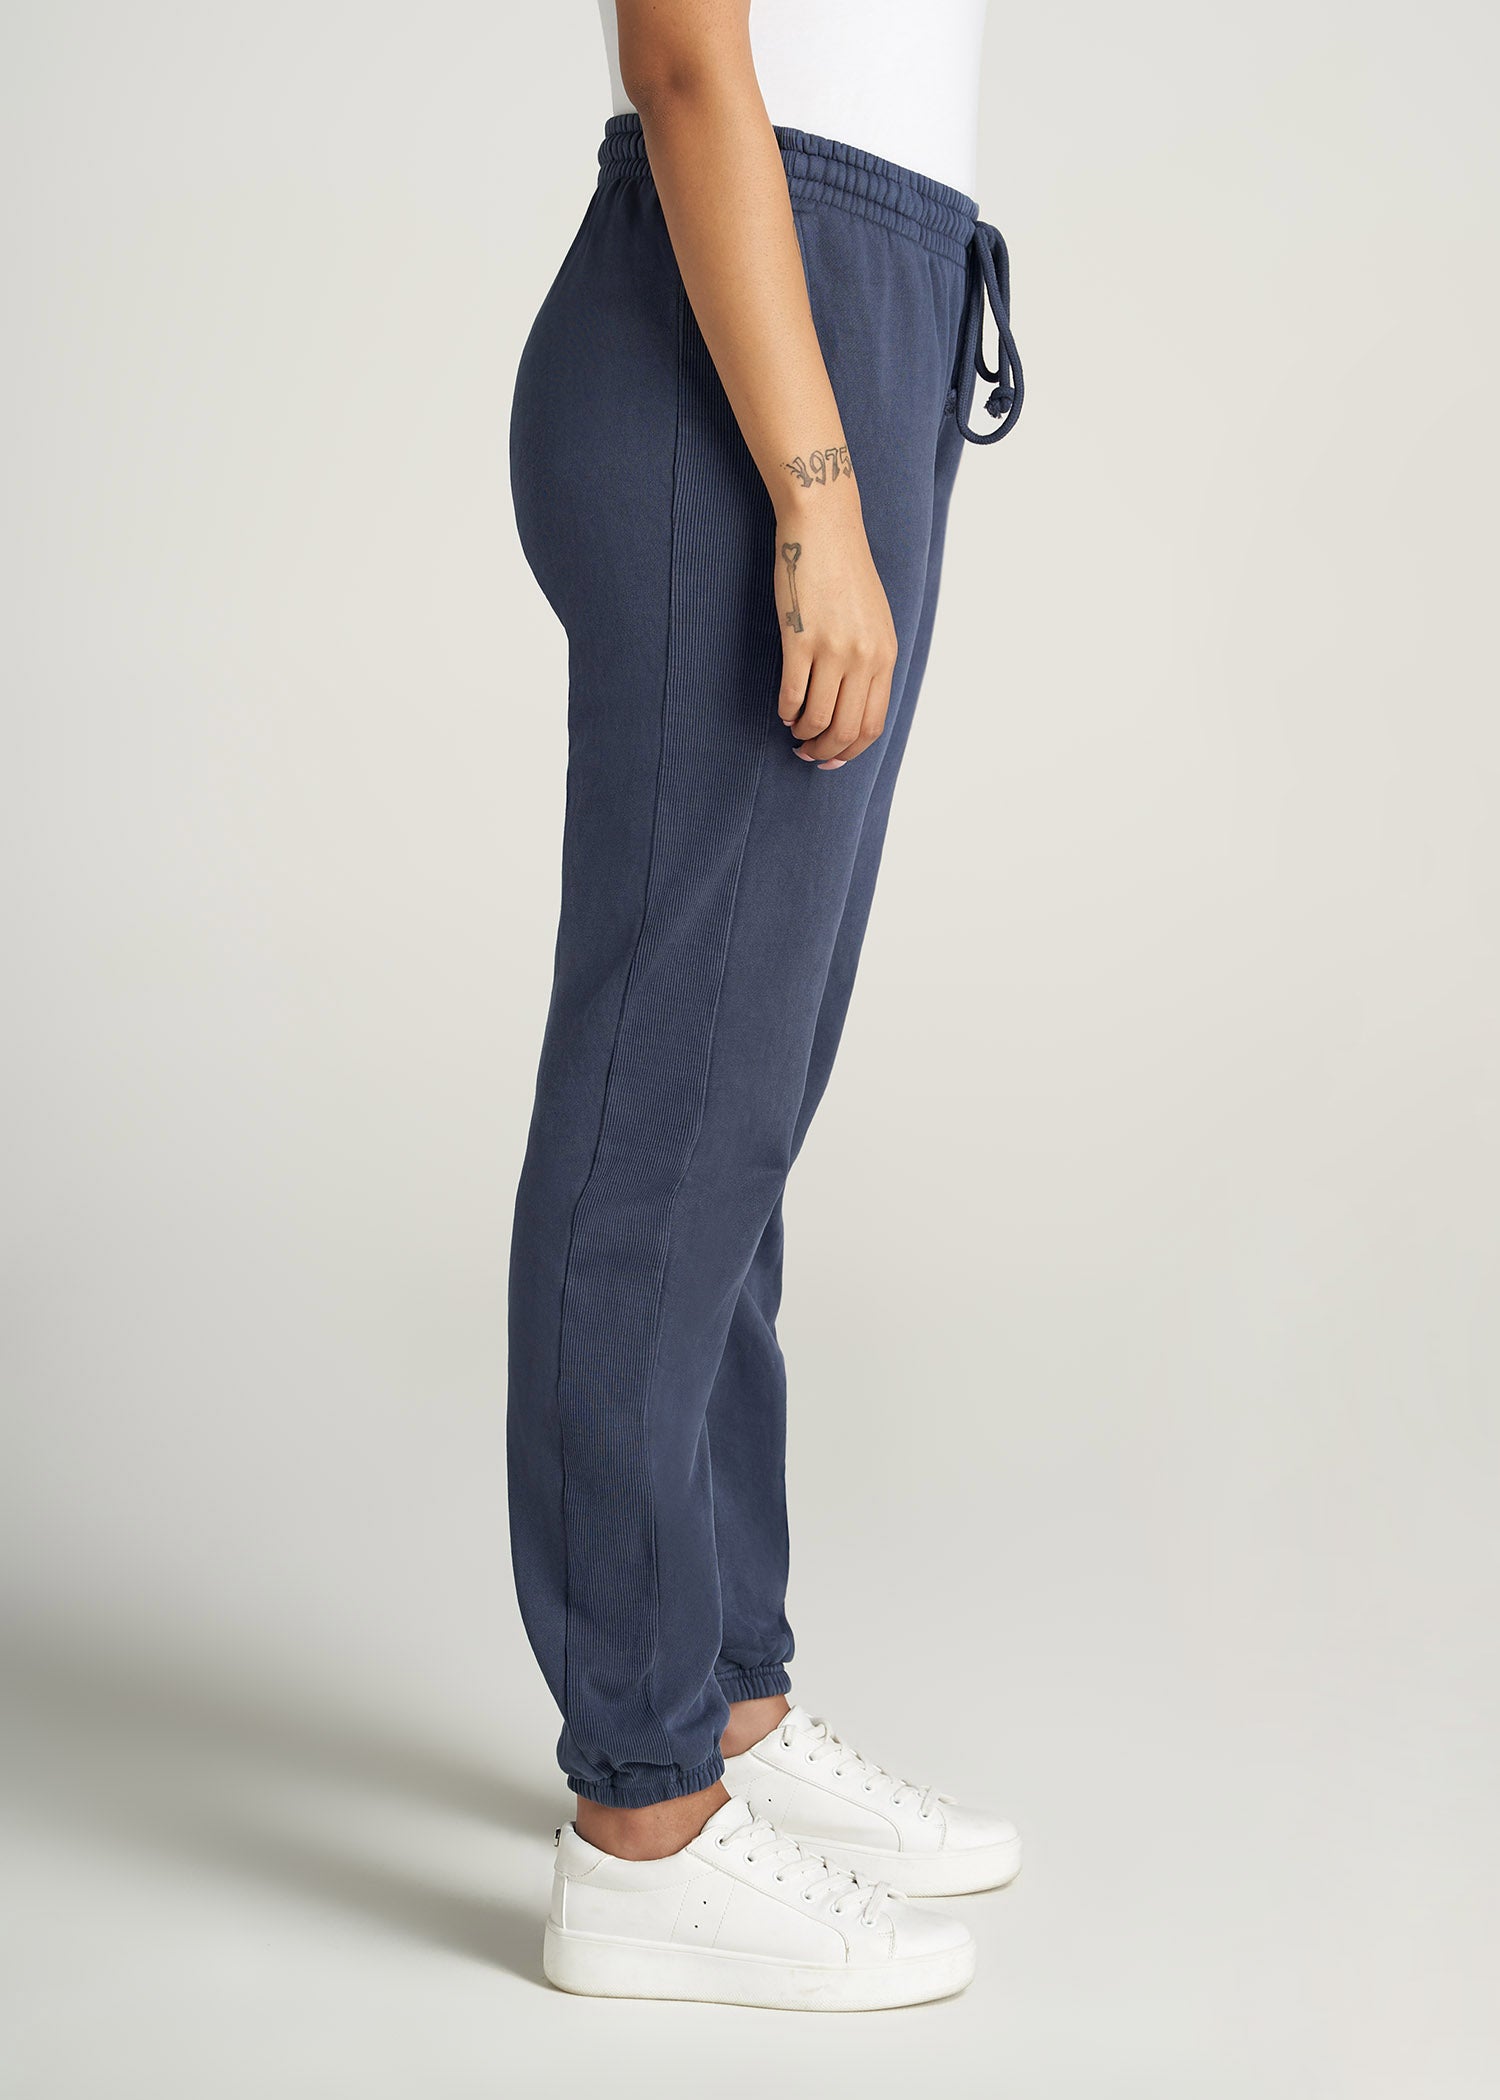 Wearever Fleece Regular Fit Women's Tall Sweatpants in Navy